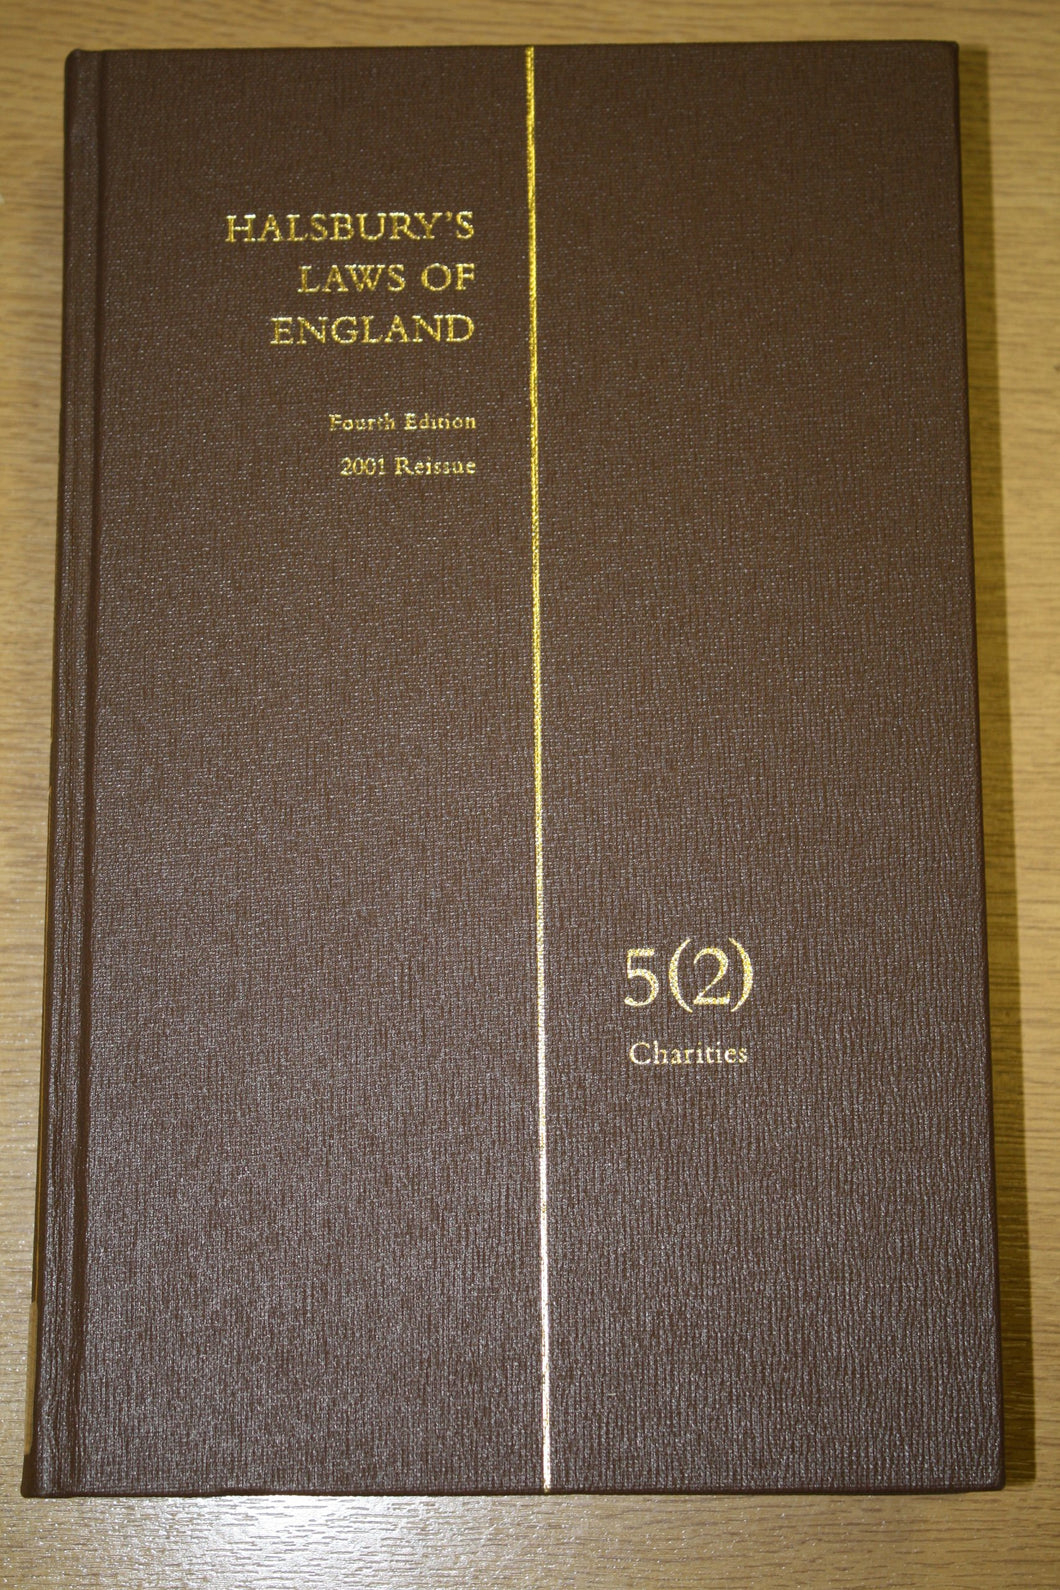 HALSBURY'S LAWS OF ENGLAND VOLUME 5(2)